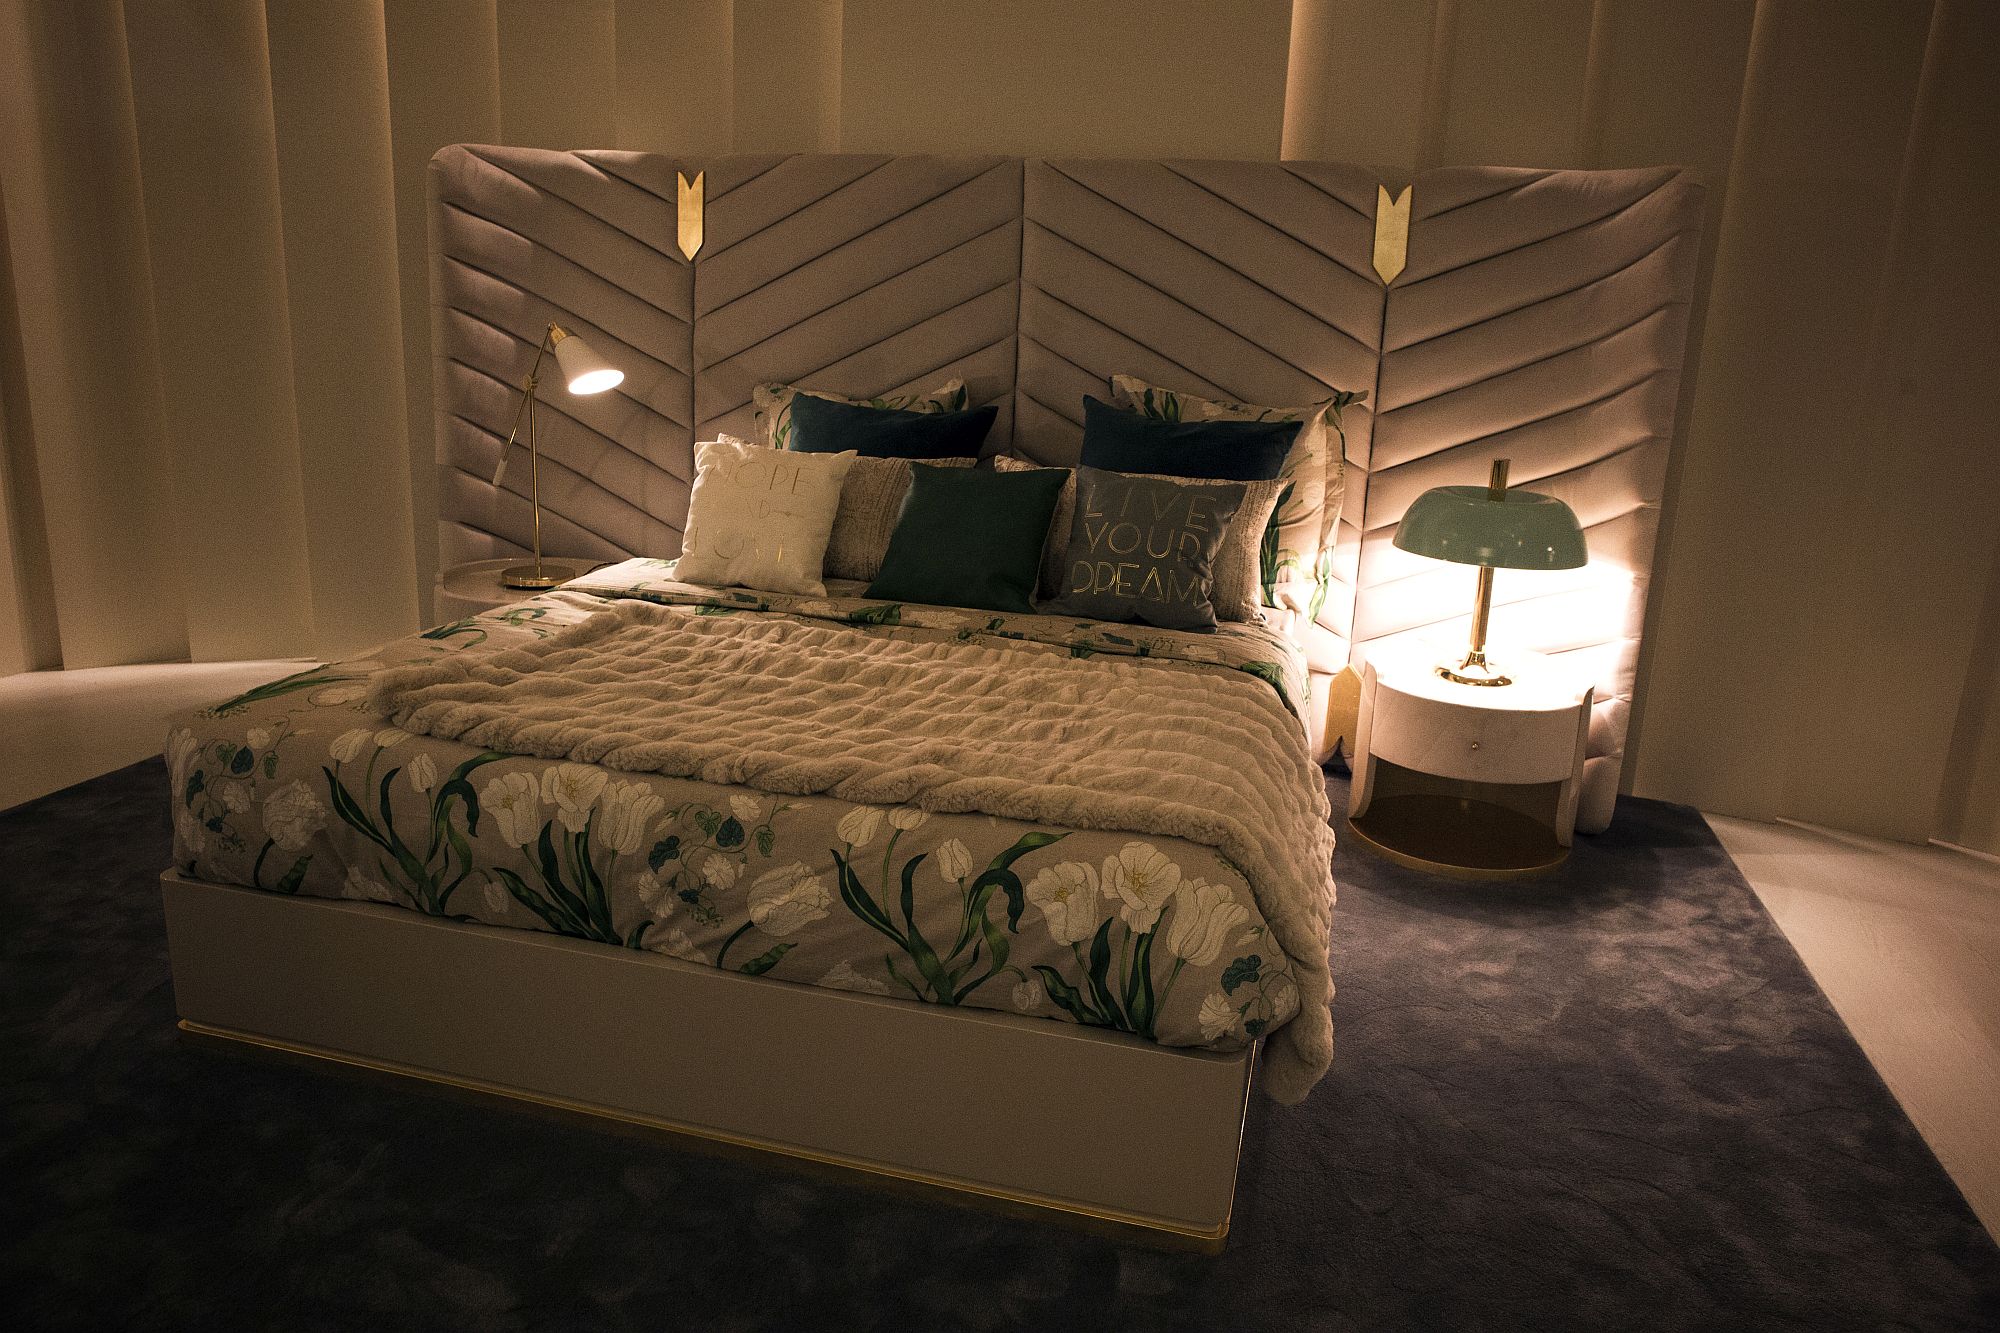 Creative Bedside Lighting Ideas, Side Table Light For Bedroom